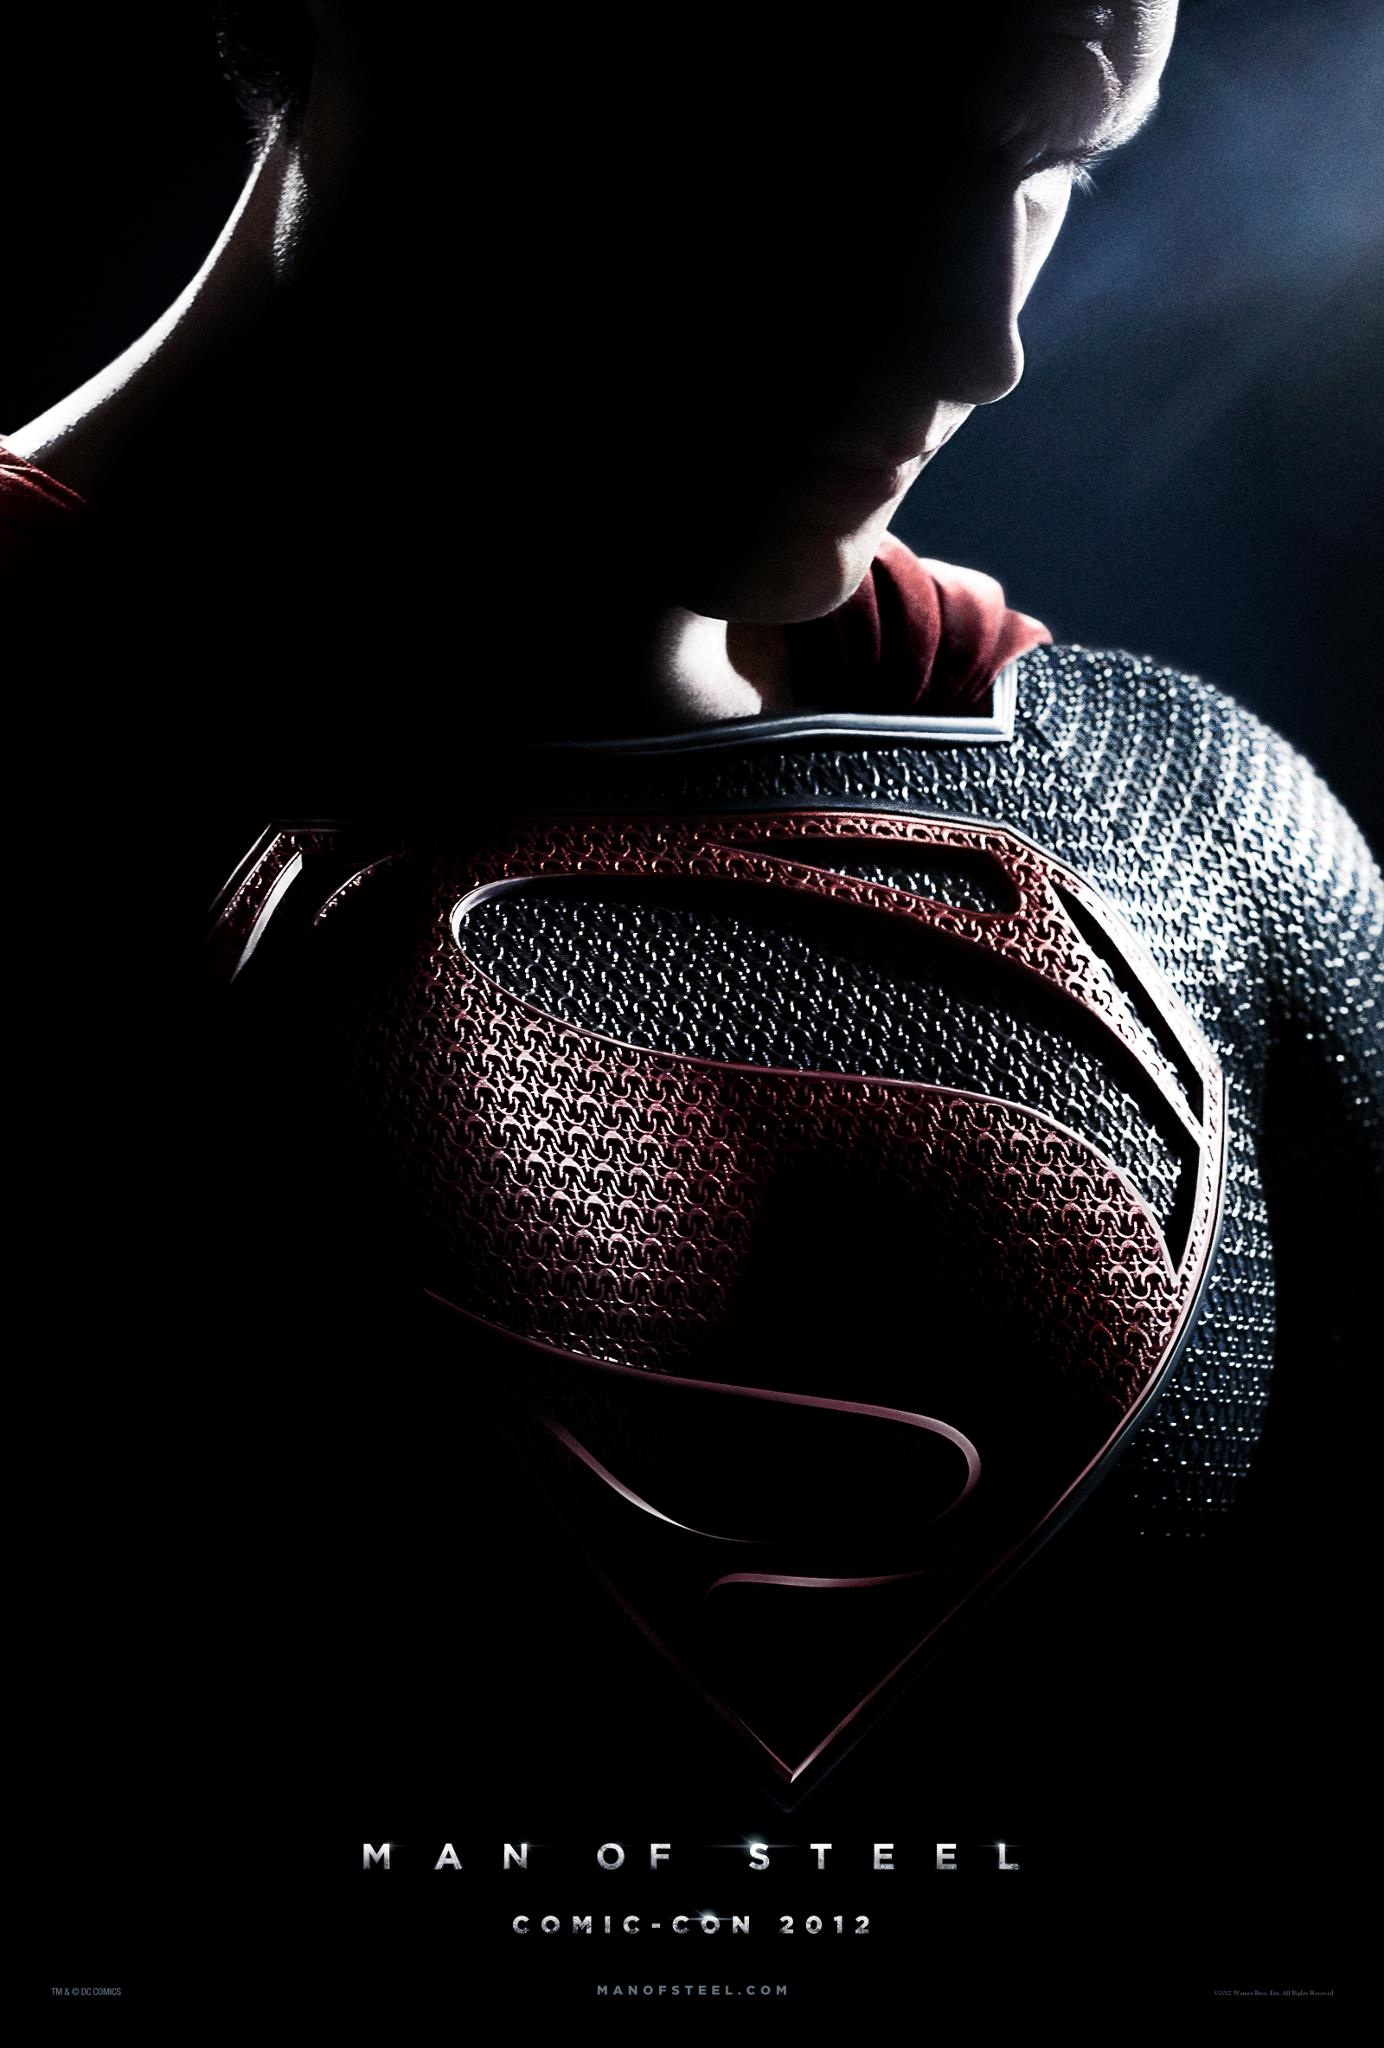 WARNER QUER NOVO SUPERMAN! IMPASSE HENRY CAVILL + NOVO FILME